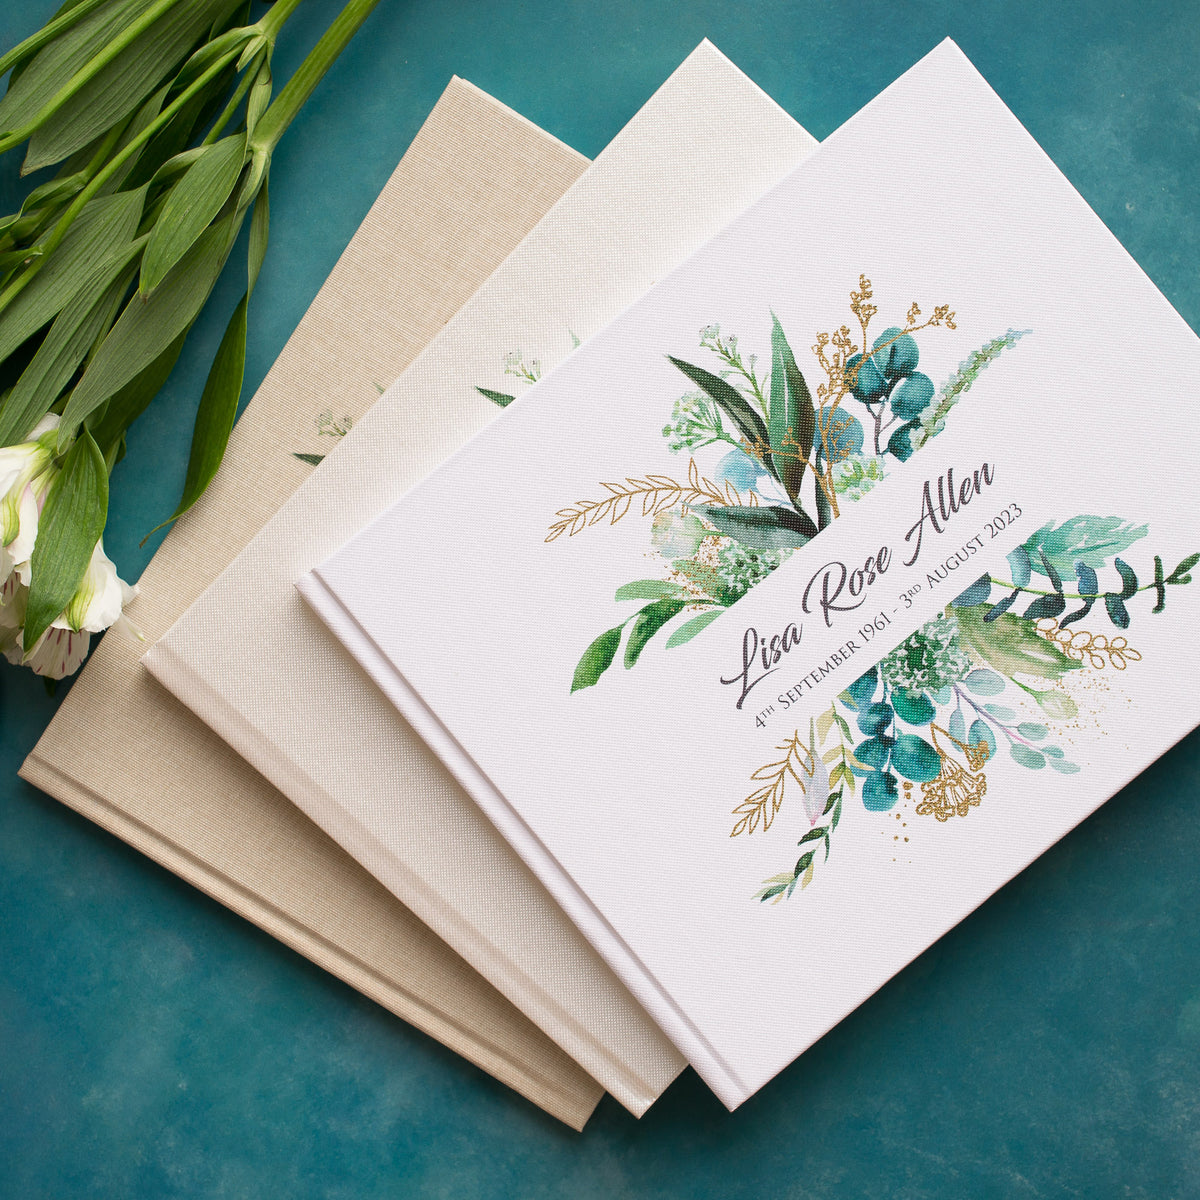 Personalised Condolence Book - Printed Green Foliage Bouquet Design